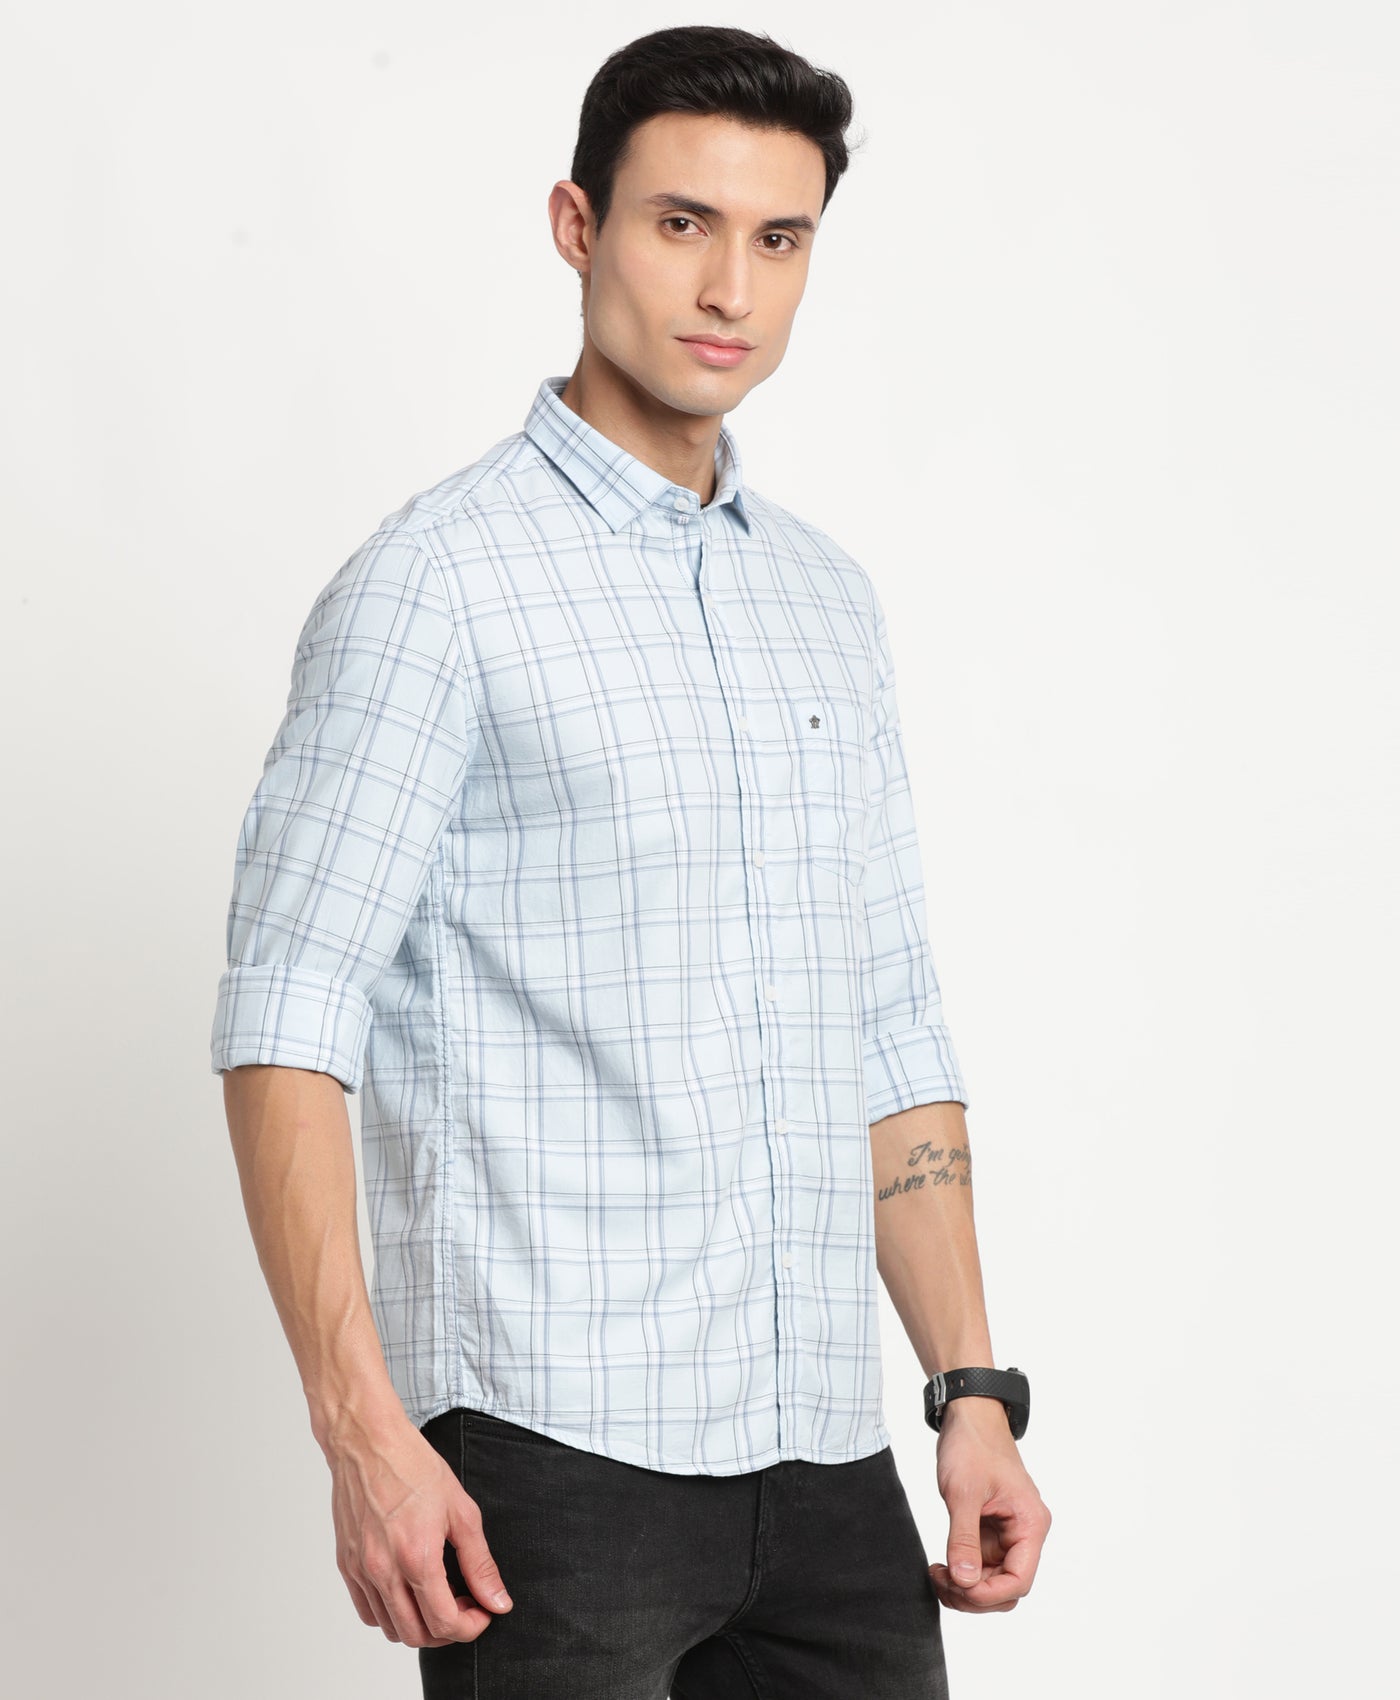 Cotton YELLOW Checkered Full Sleeve Casual Shirt